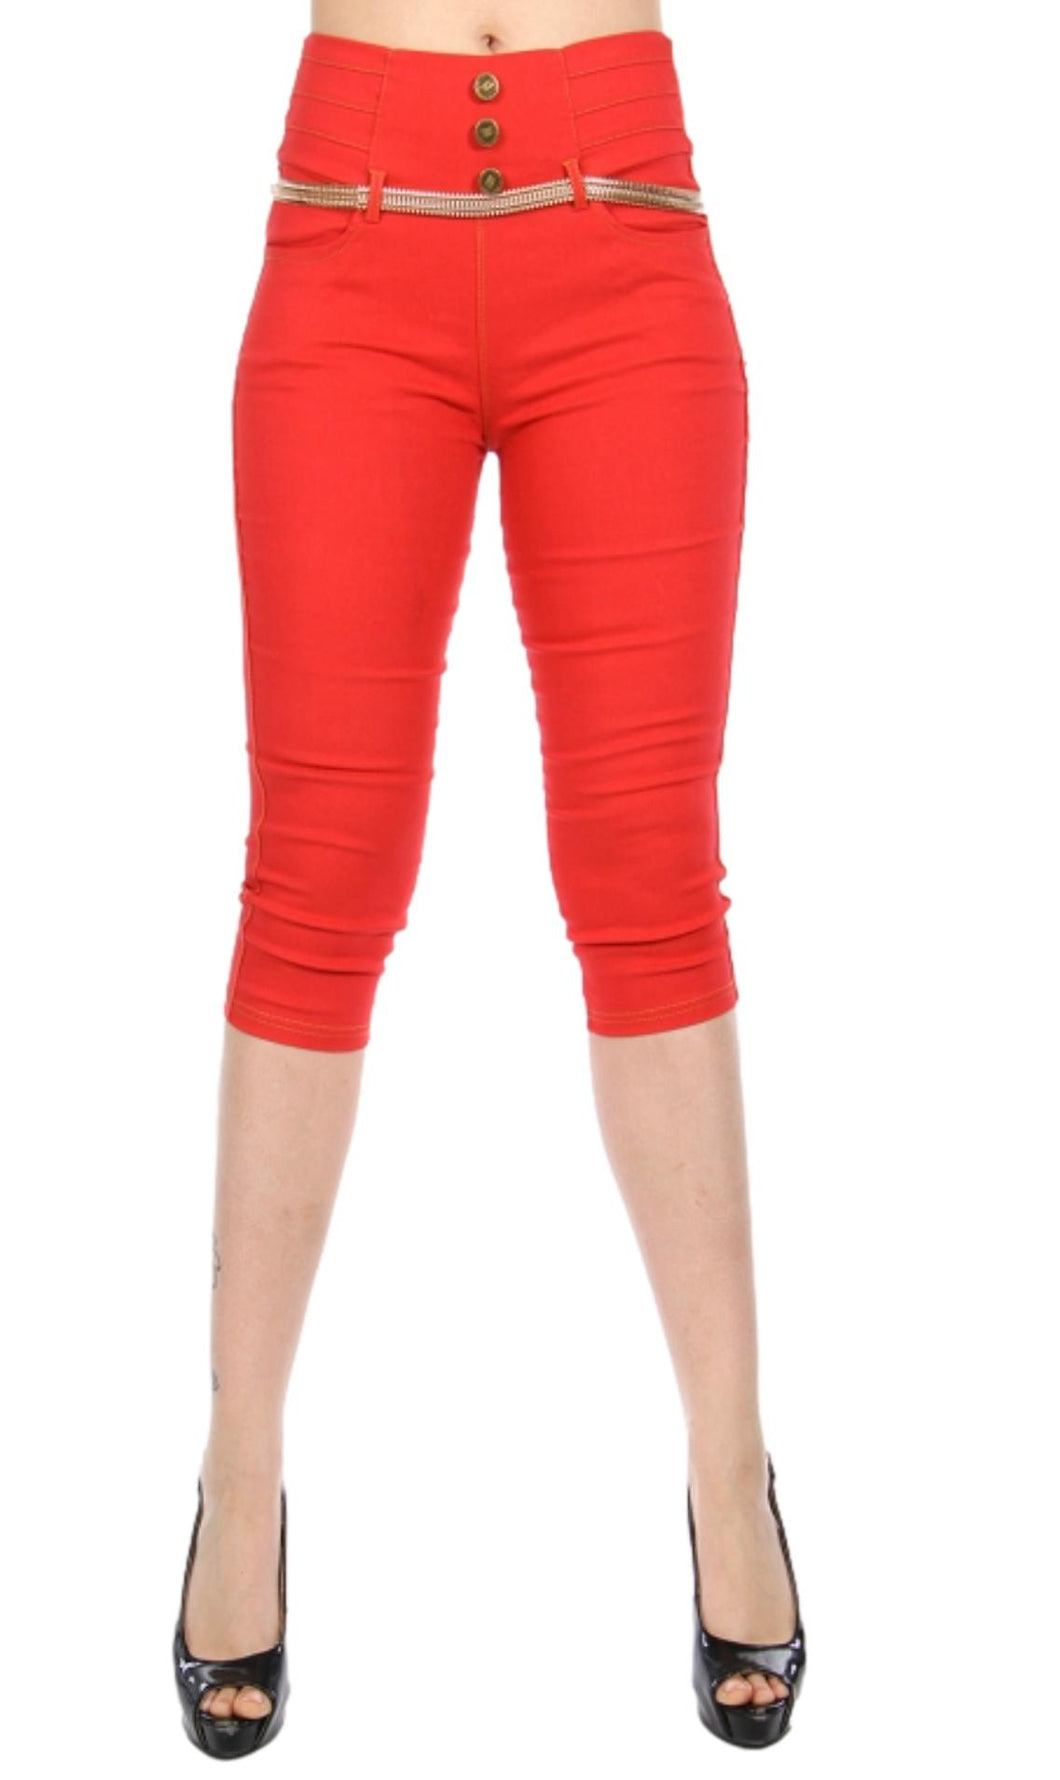 Women's Red Comfy and Versatile High-waist Capri Stretch Jeggings